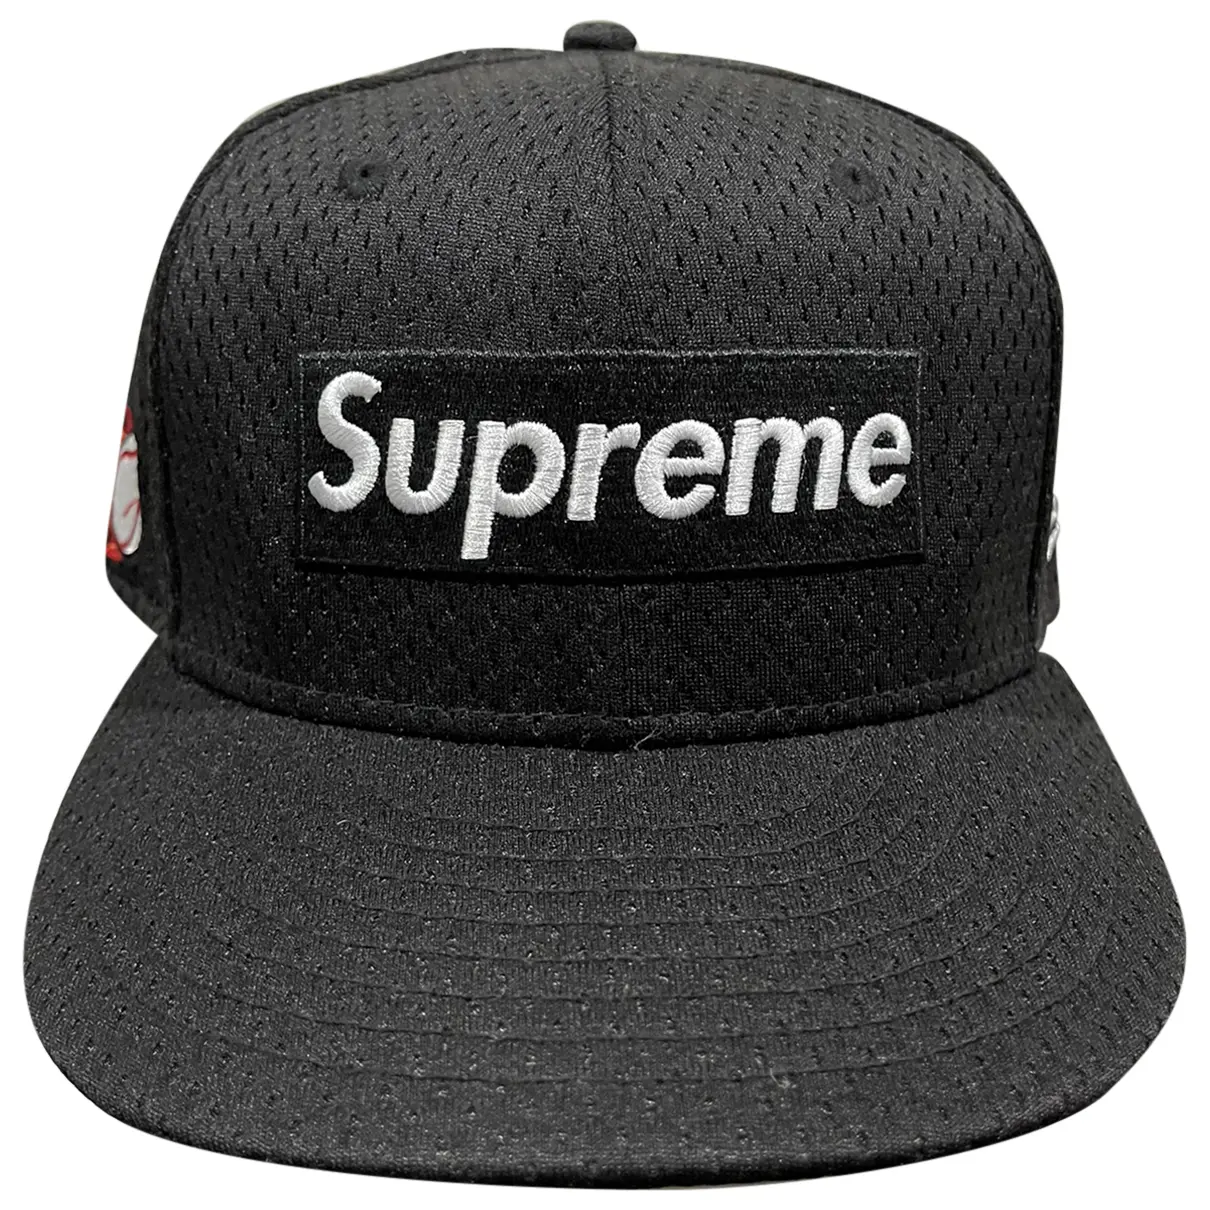 Box Logo hat